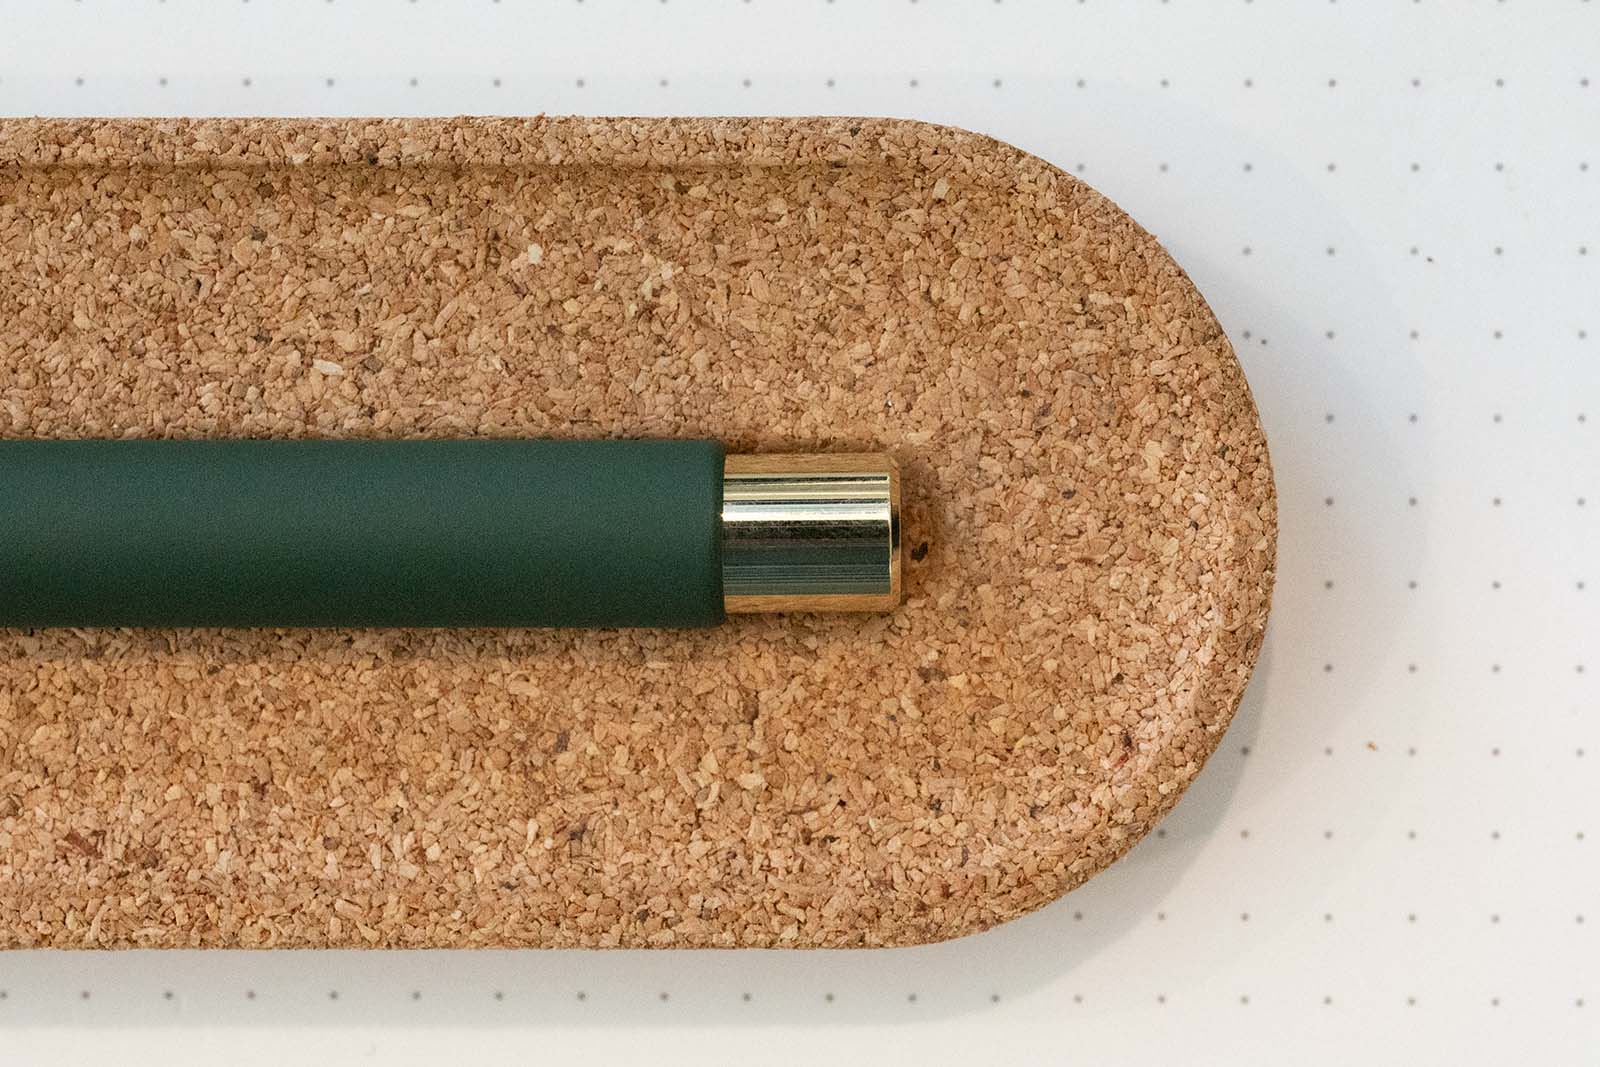 A mark one on a cork pen tray.